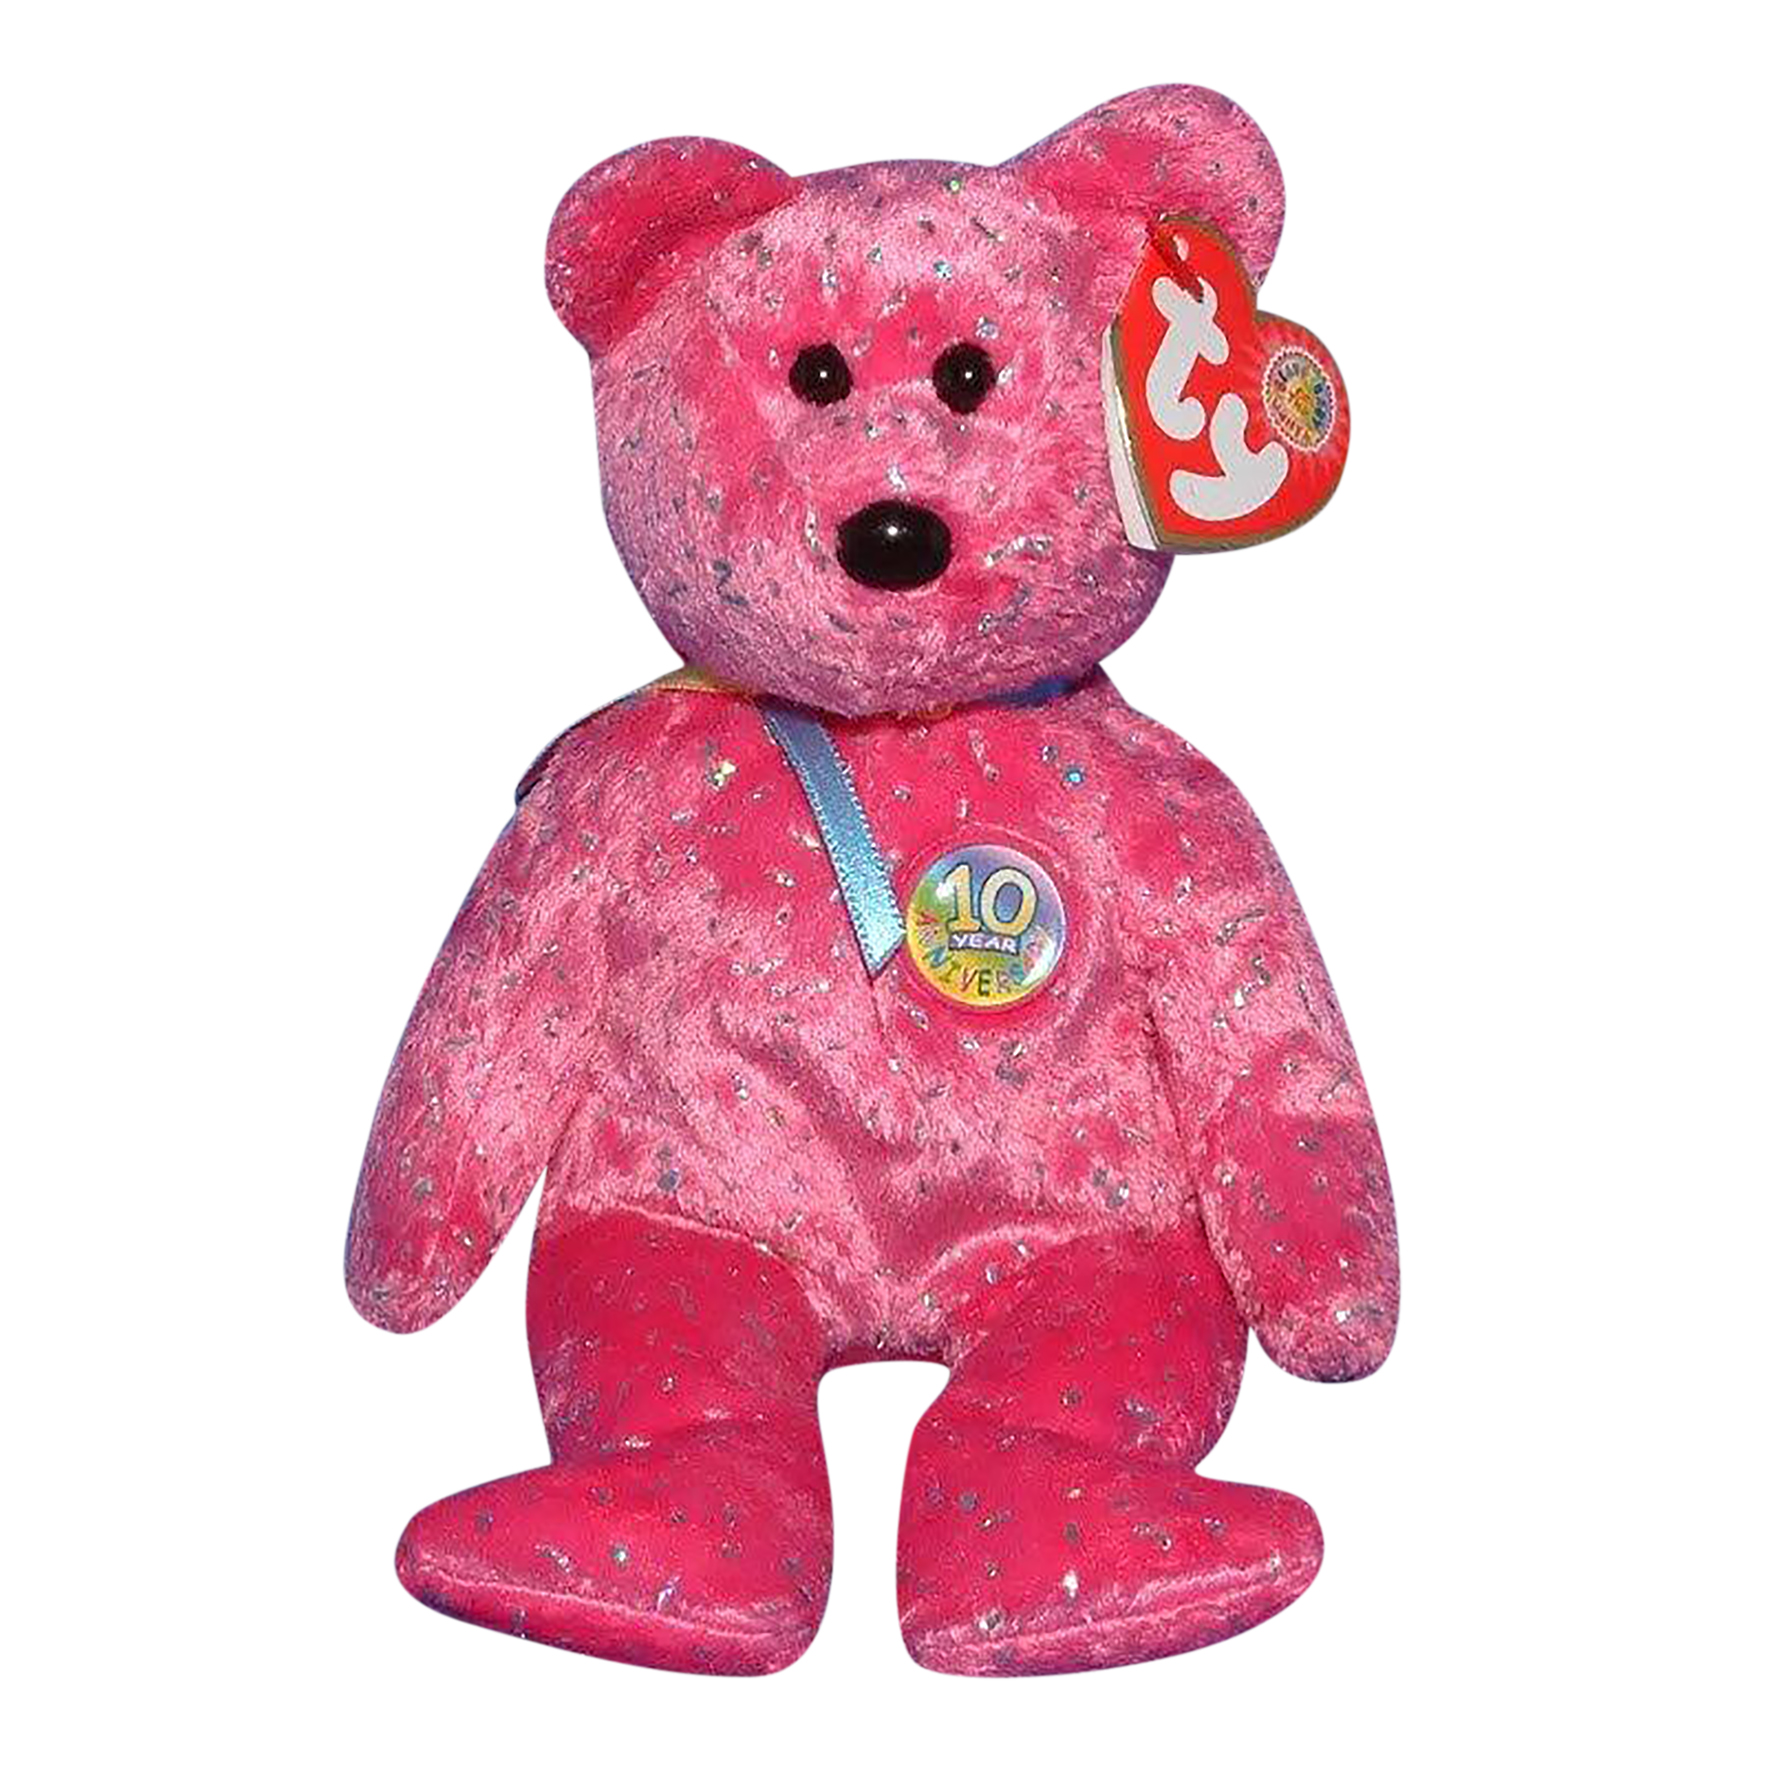 pink ty bear